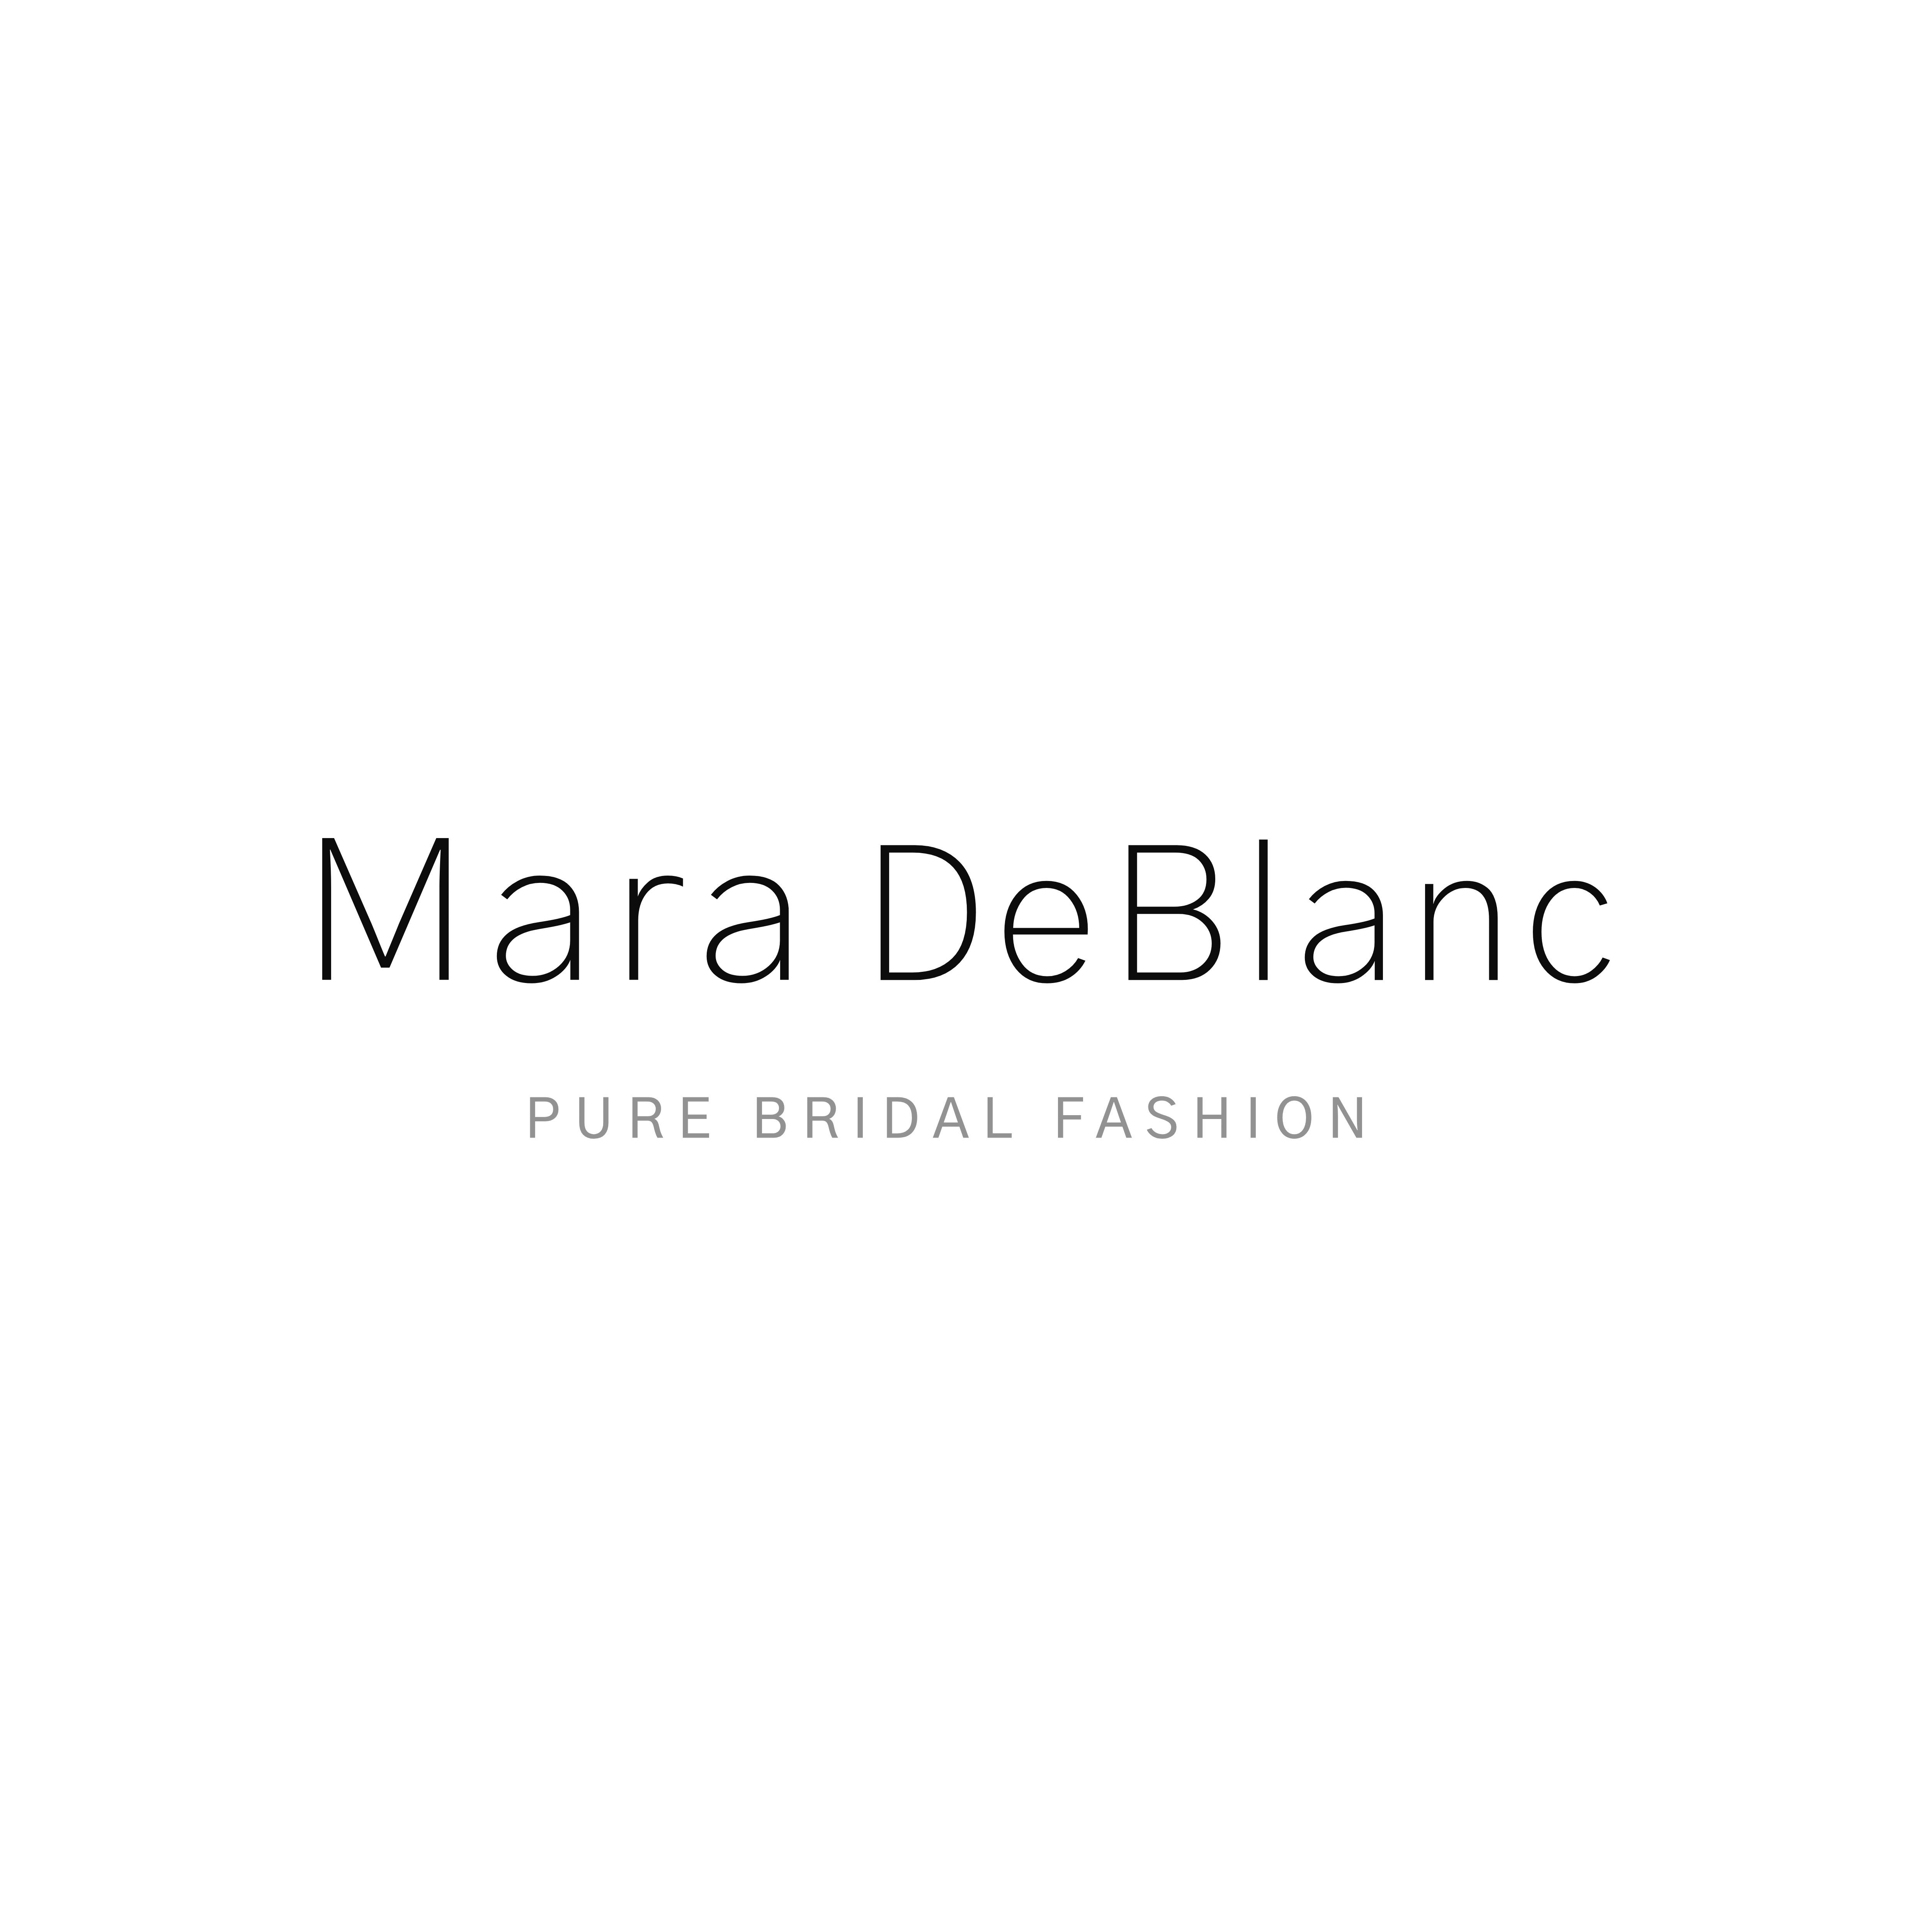 Mara DeBlanc GmbH in München - Logo